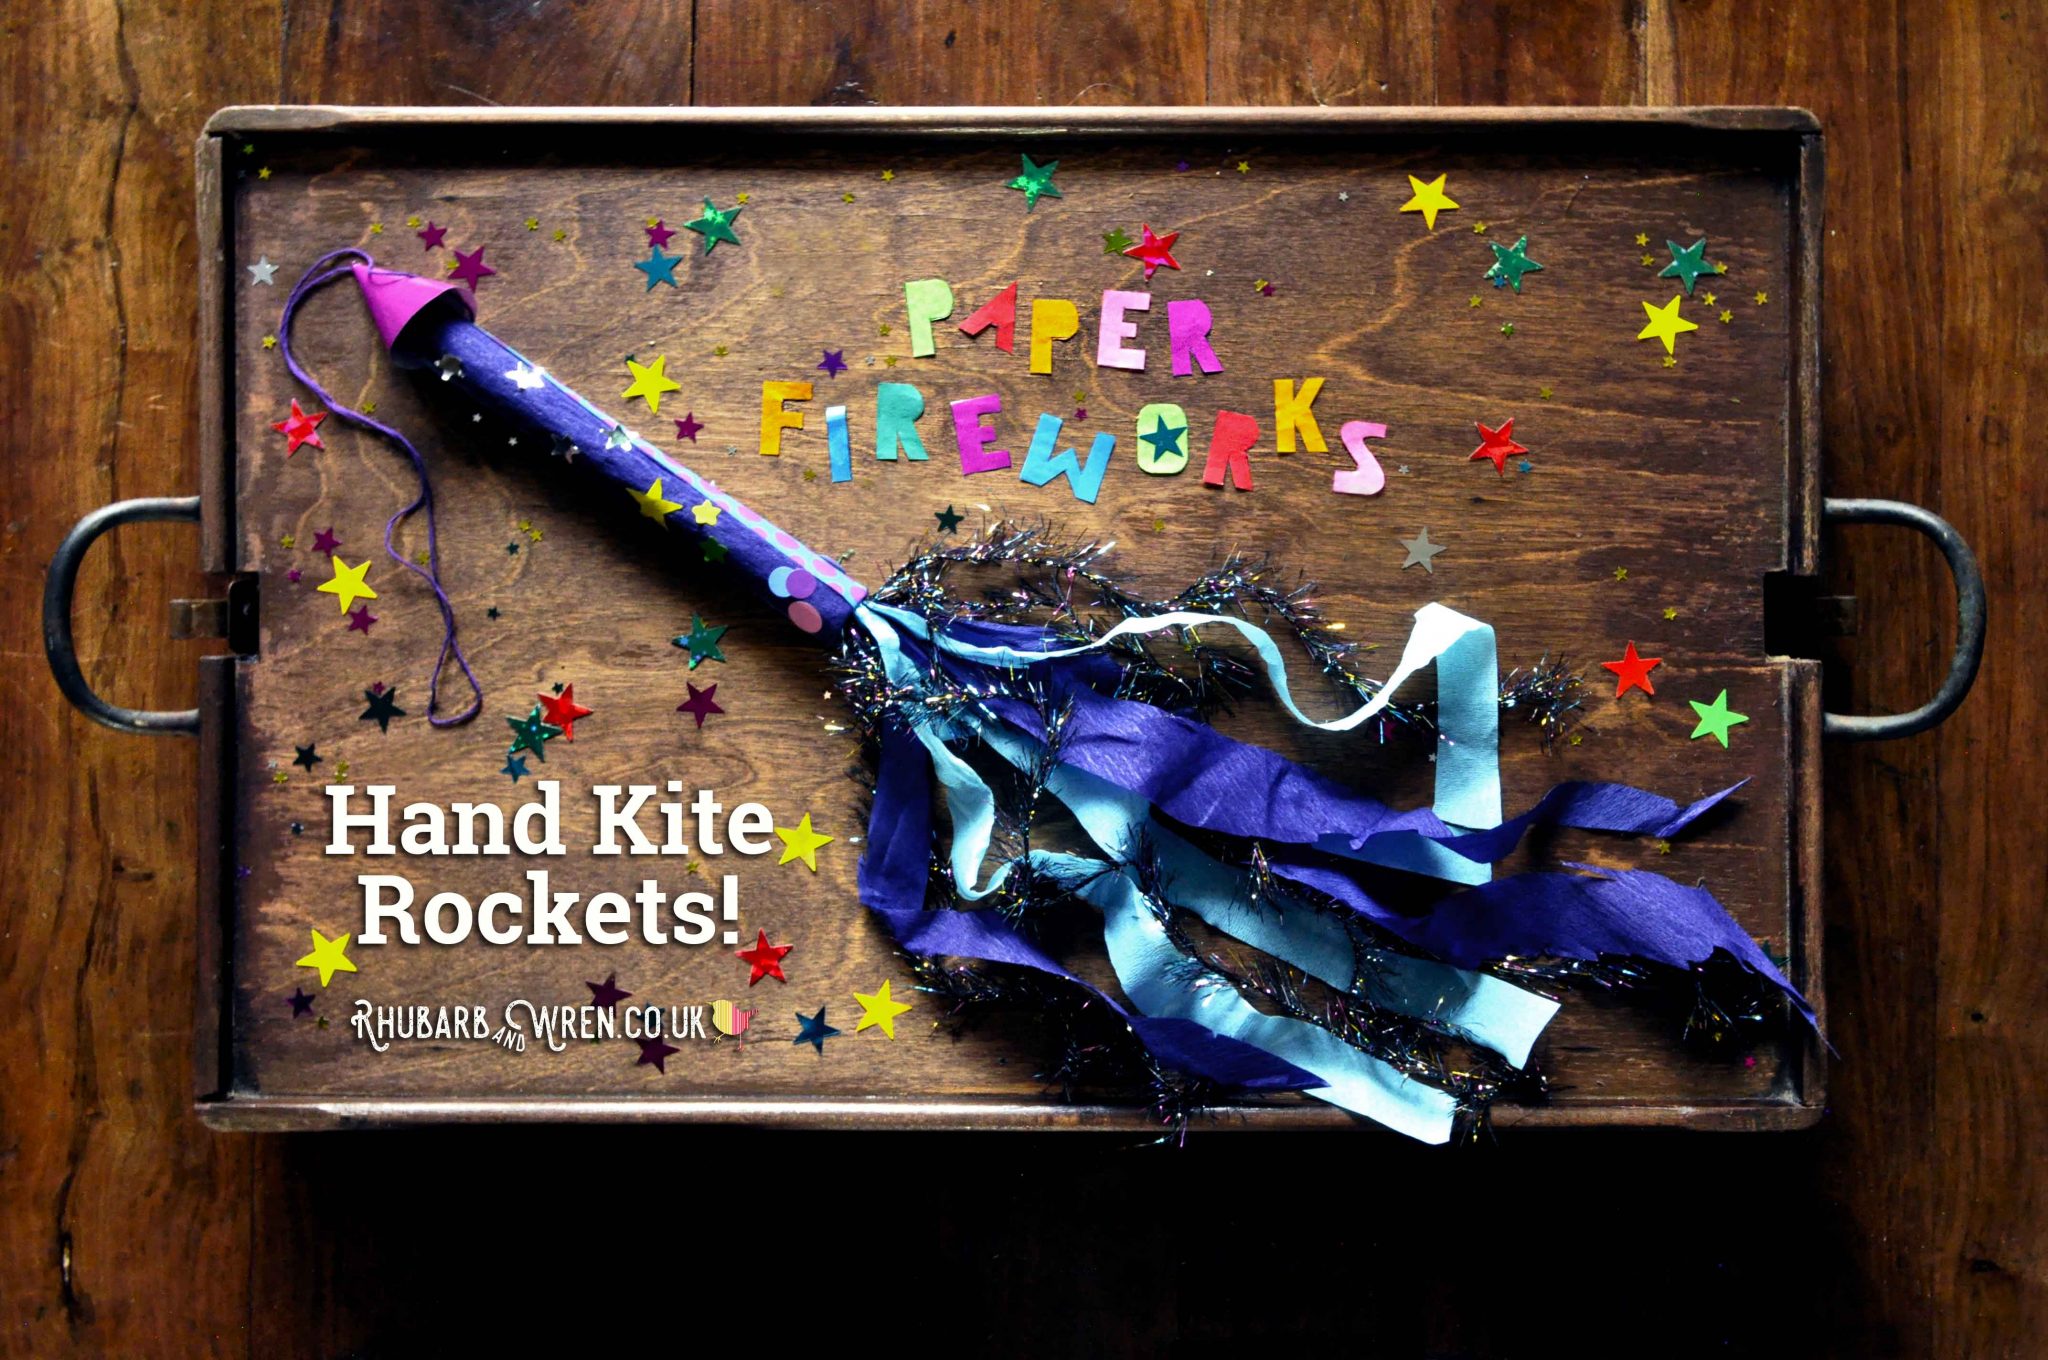 Paper fireworks craft for kids - making hand kites